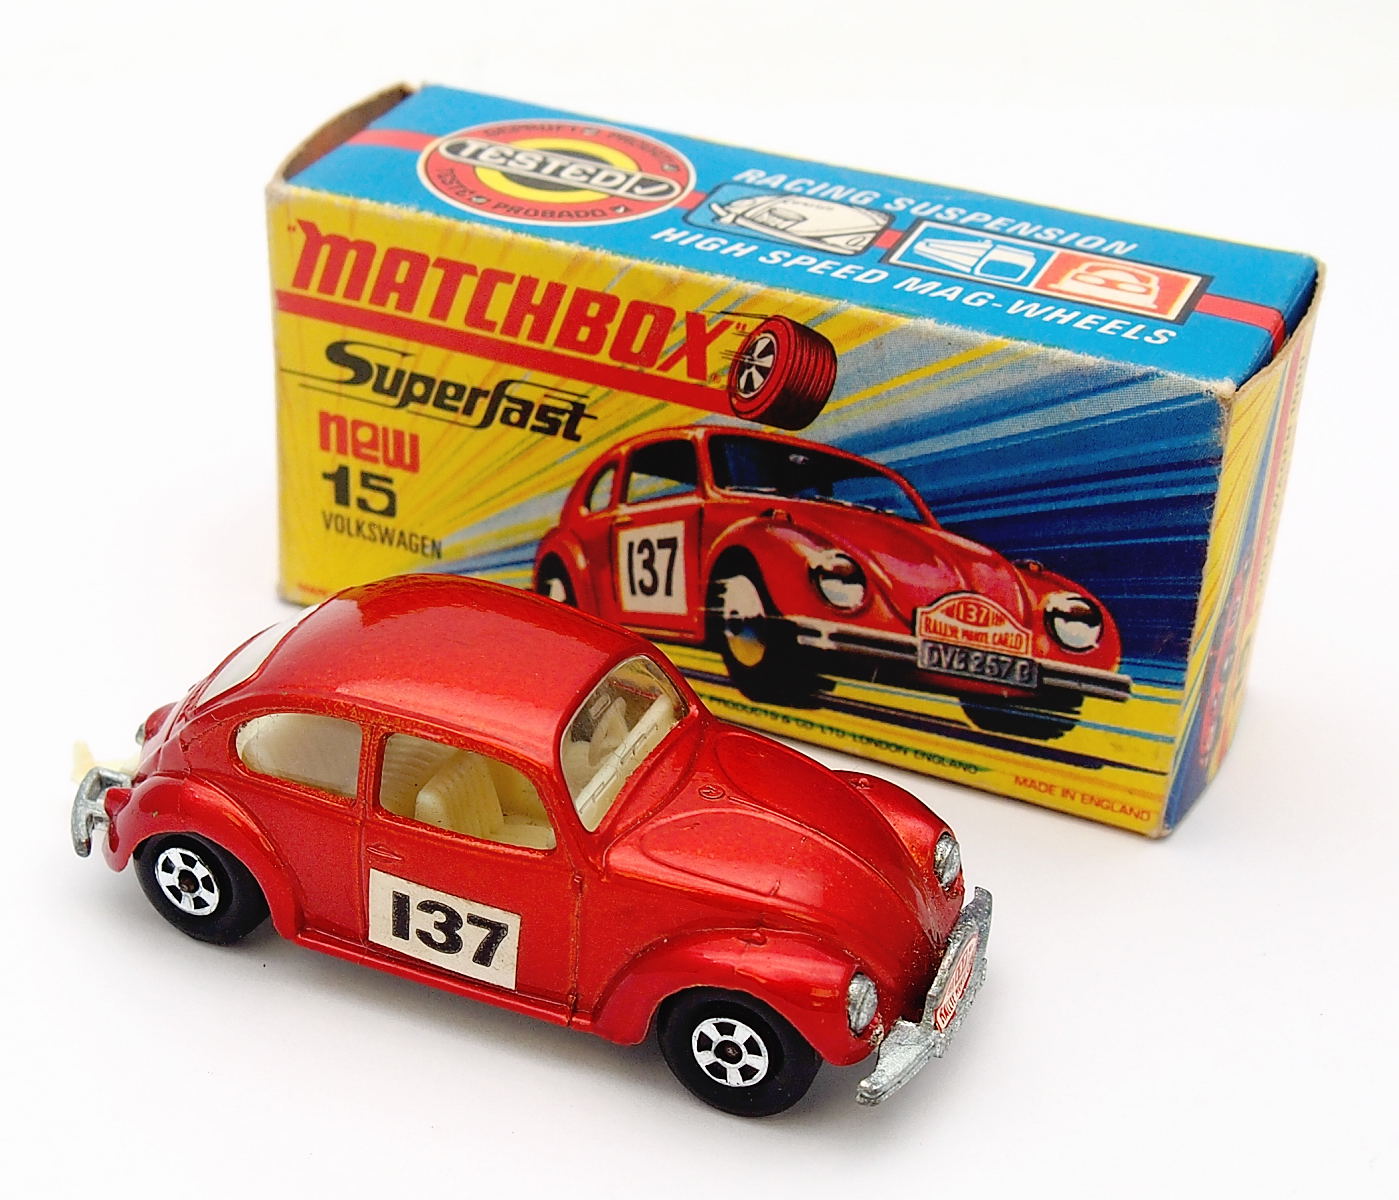 Matchbox Superfast No.15 Volkswagon 1500 Mint & Boxed #9557